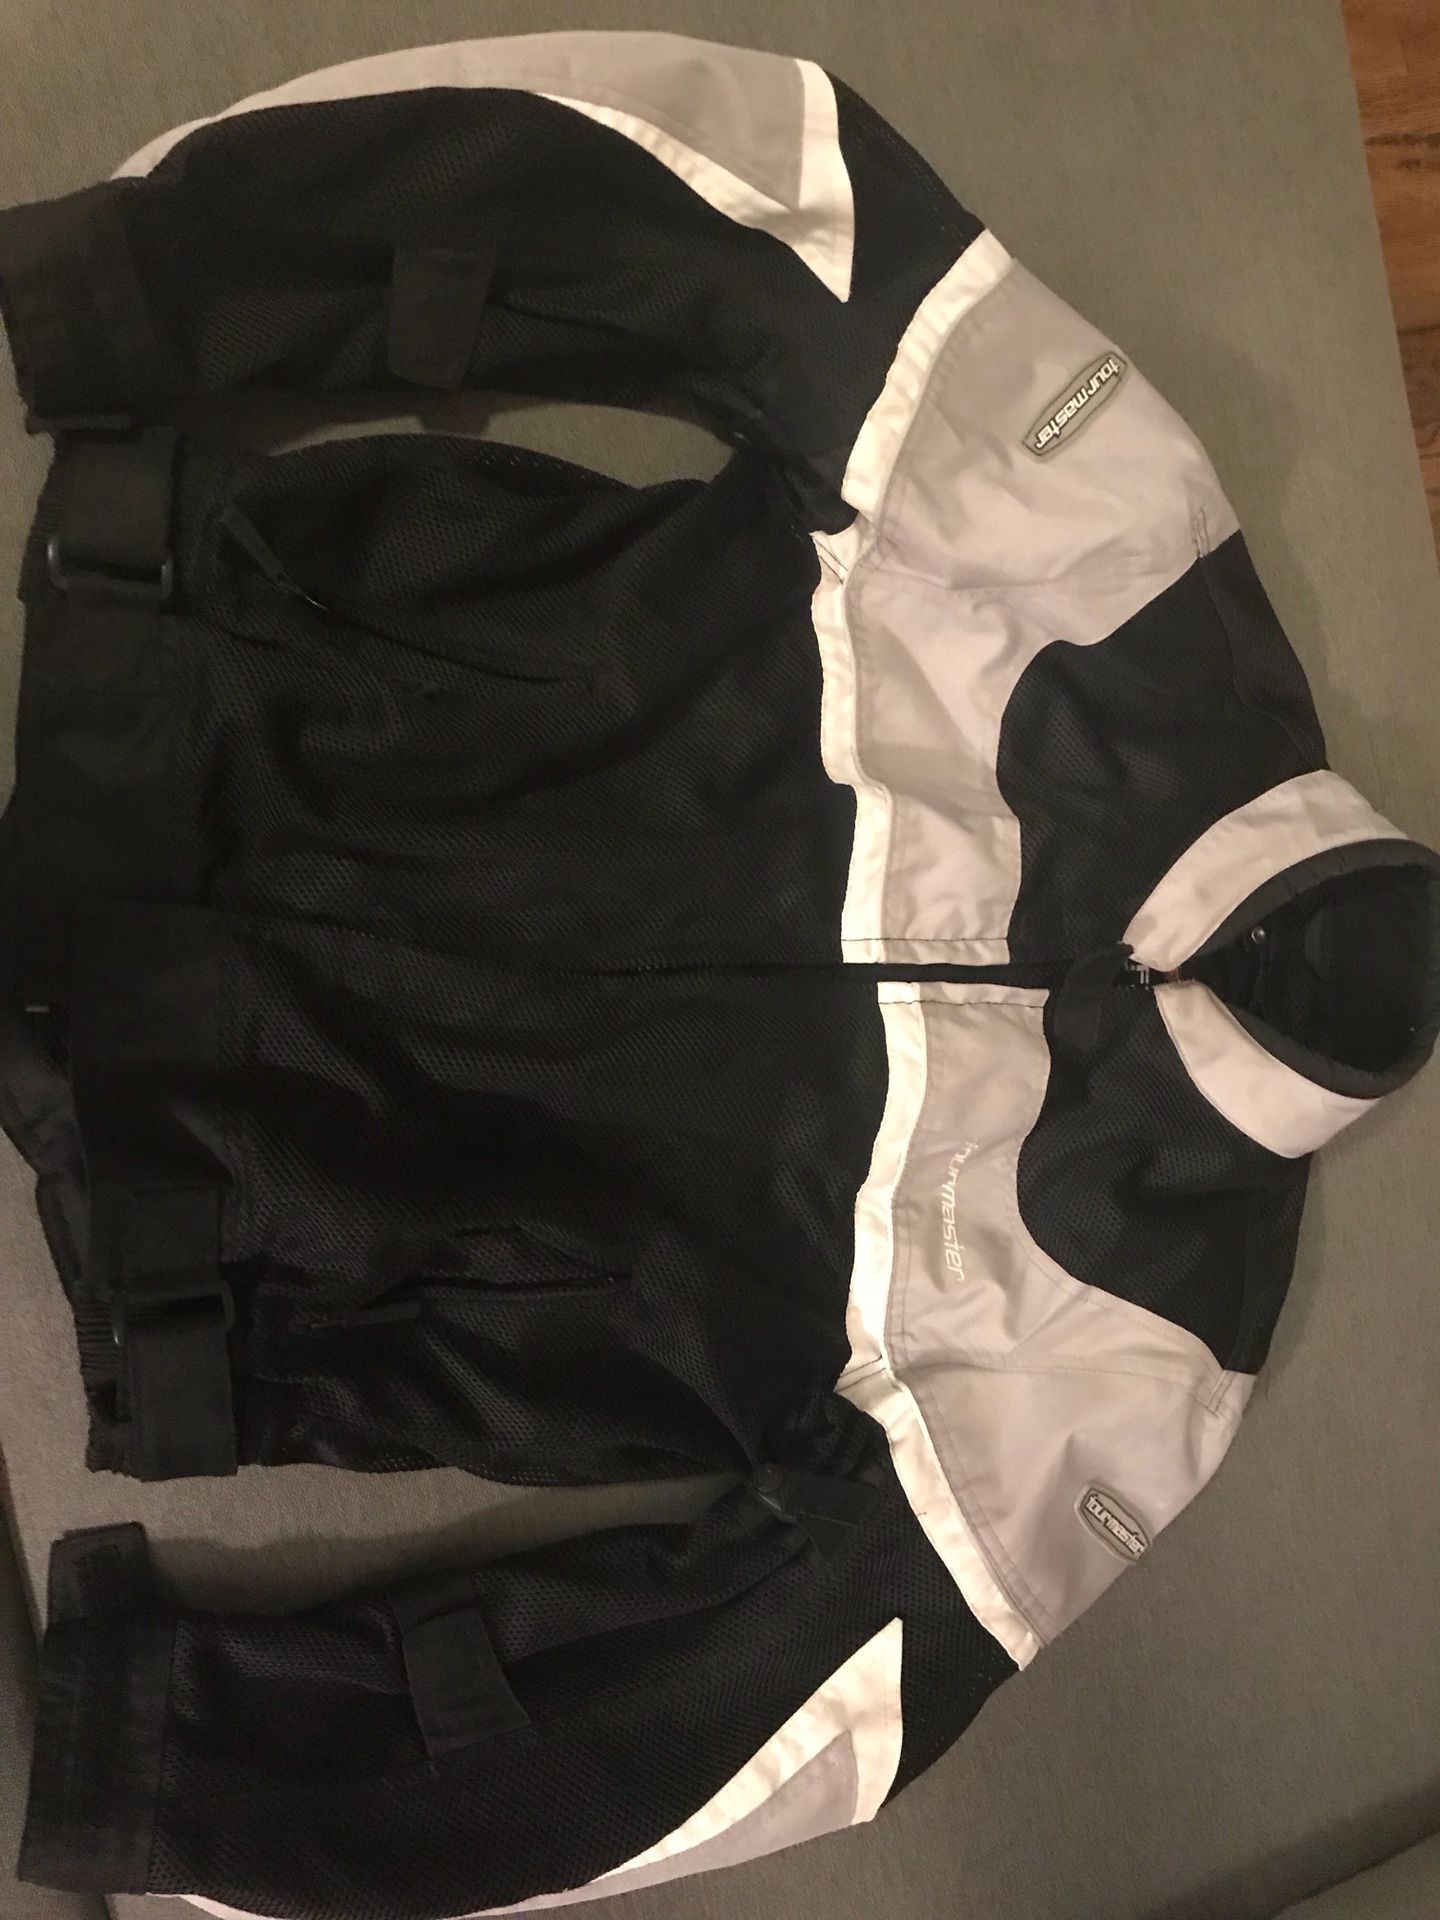 Motorcycle jacket: Tourmaster Draft size small/40